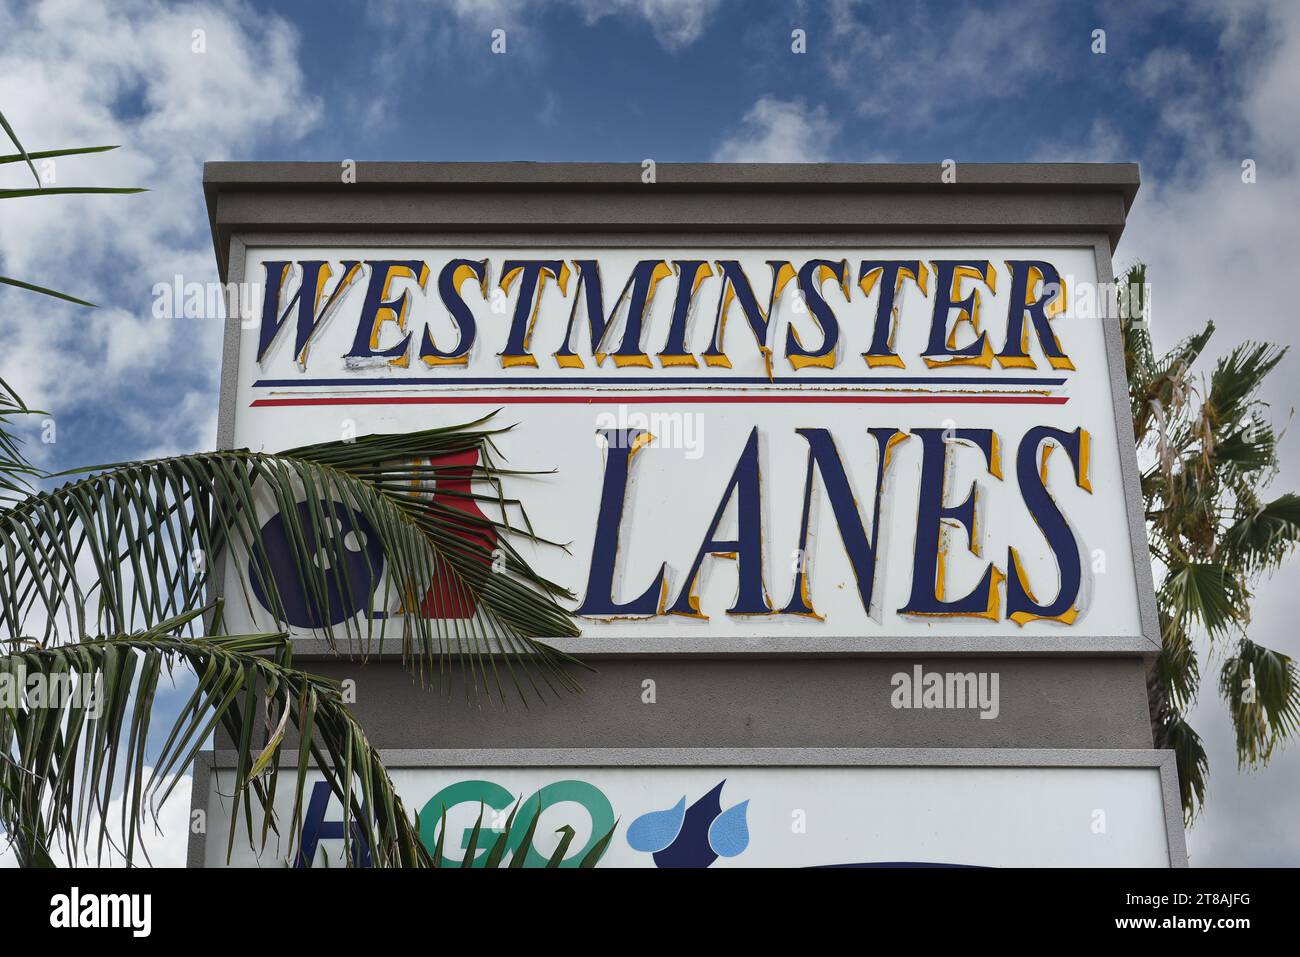 WESTMINSTER, CALIFORNIE - 25 octobre 2023 : Westminster Lanes Bowling Alley signe. Banque D'Images